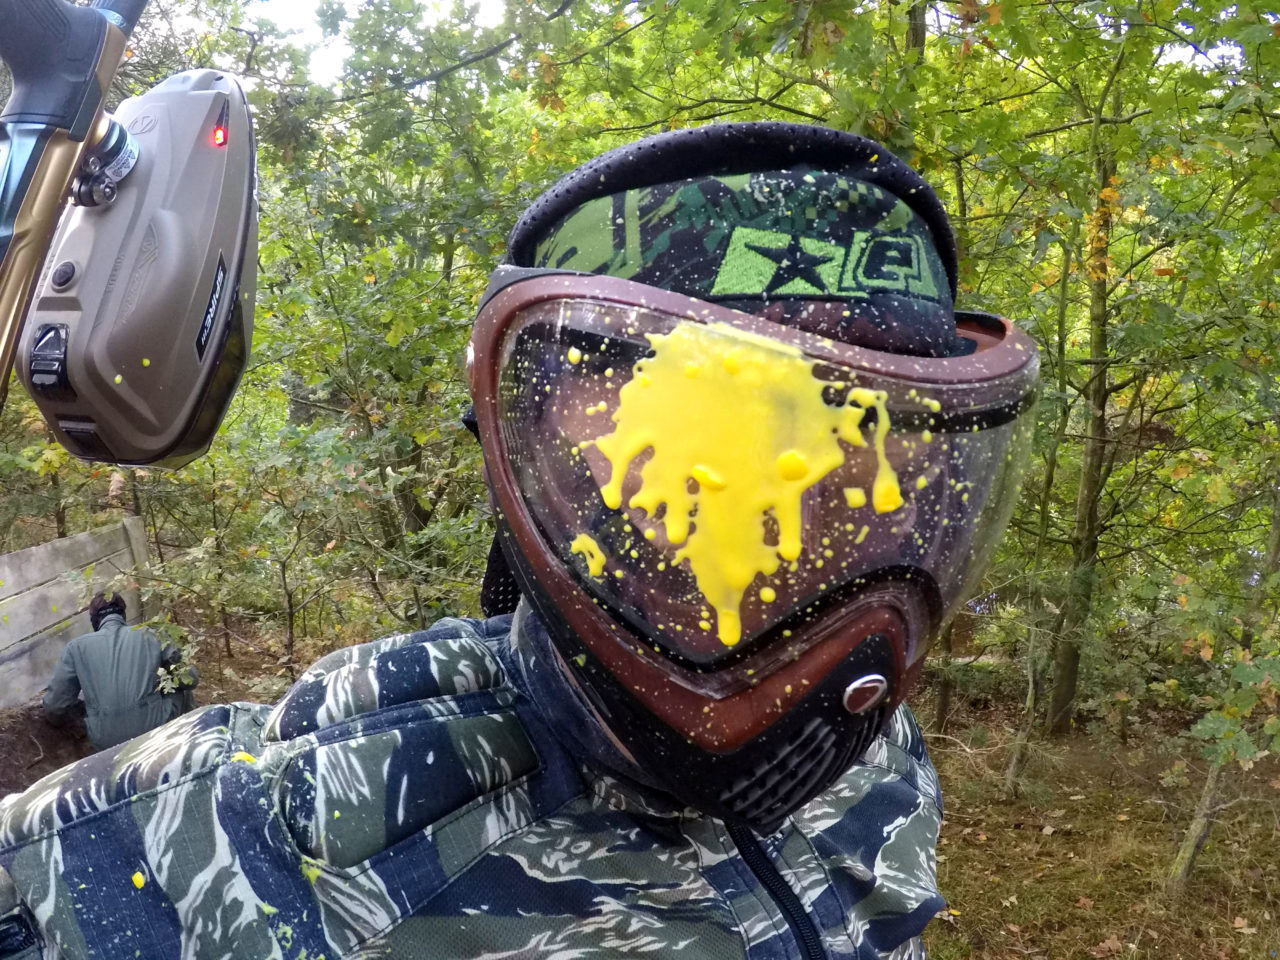 Gelber Farbfleck auf Paintball Maske